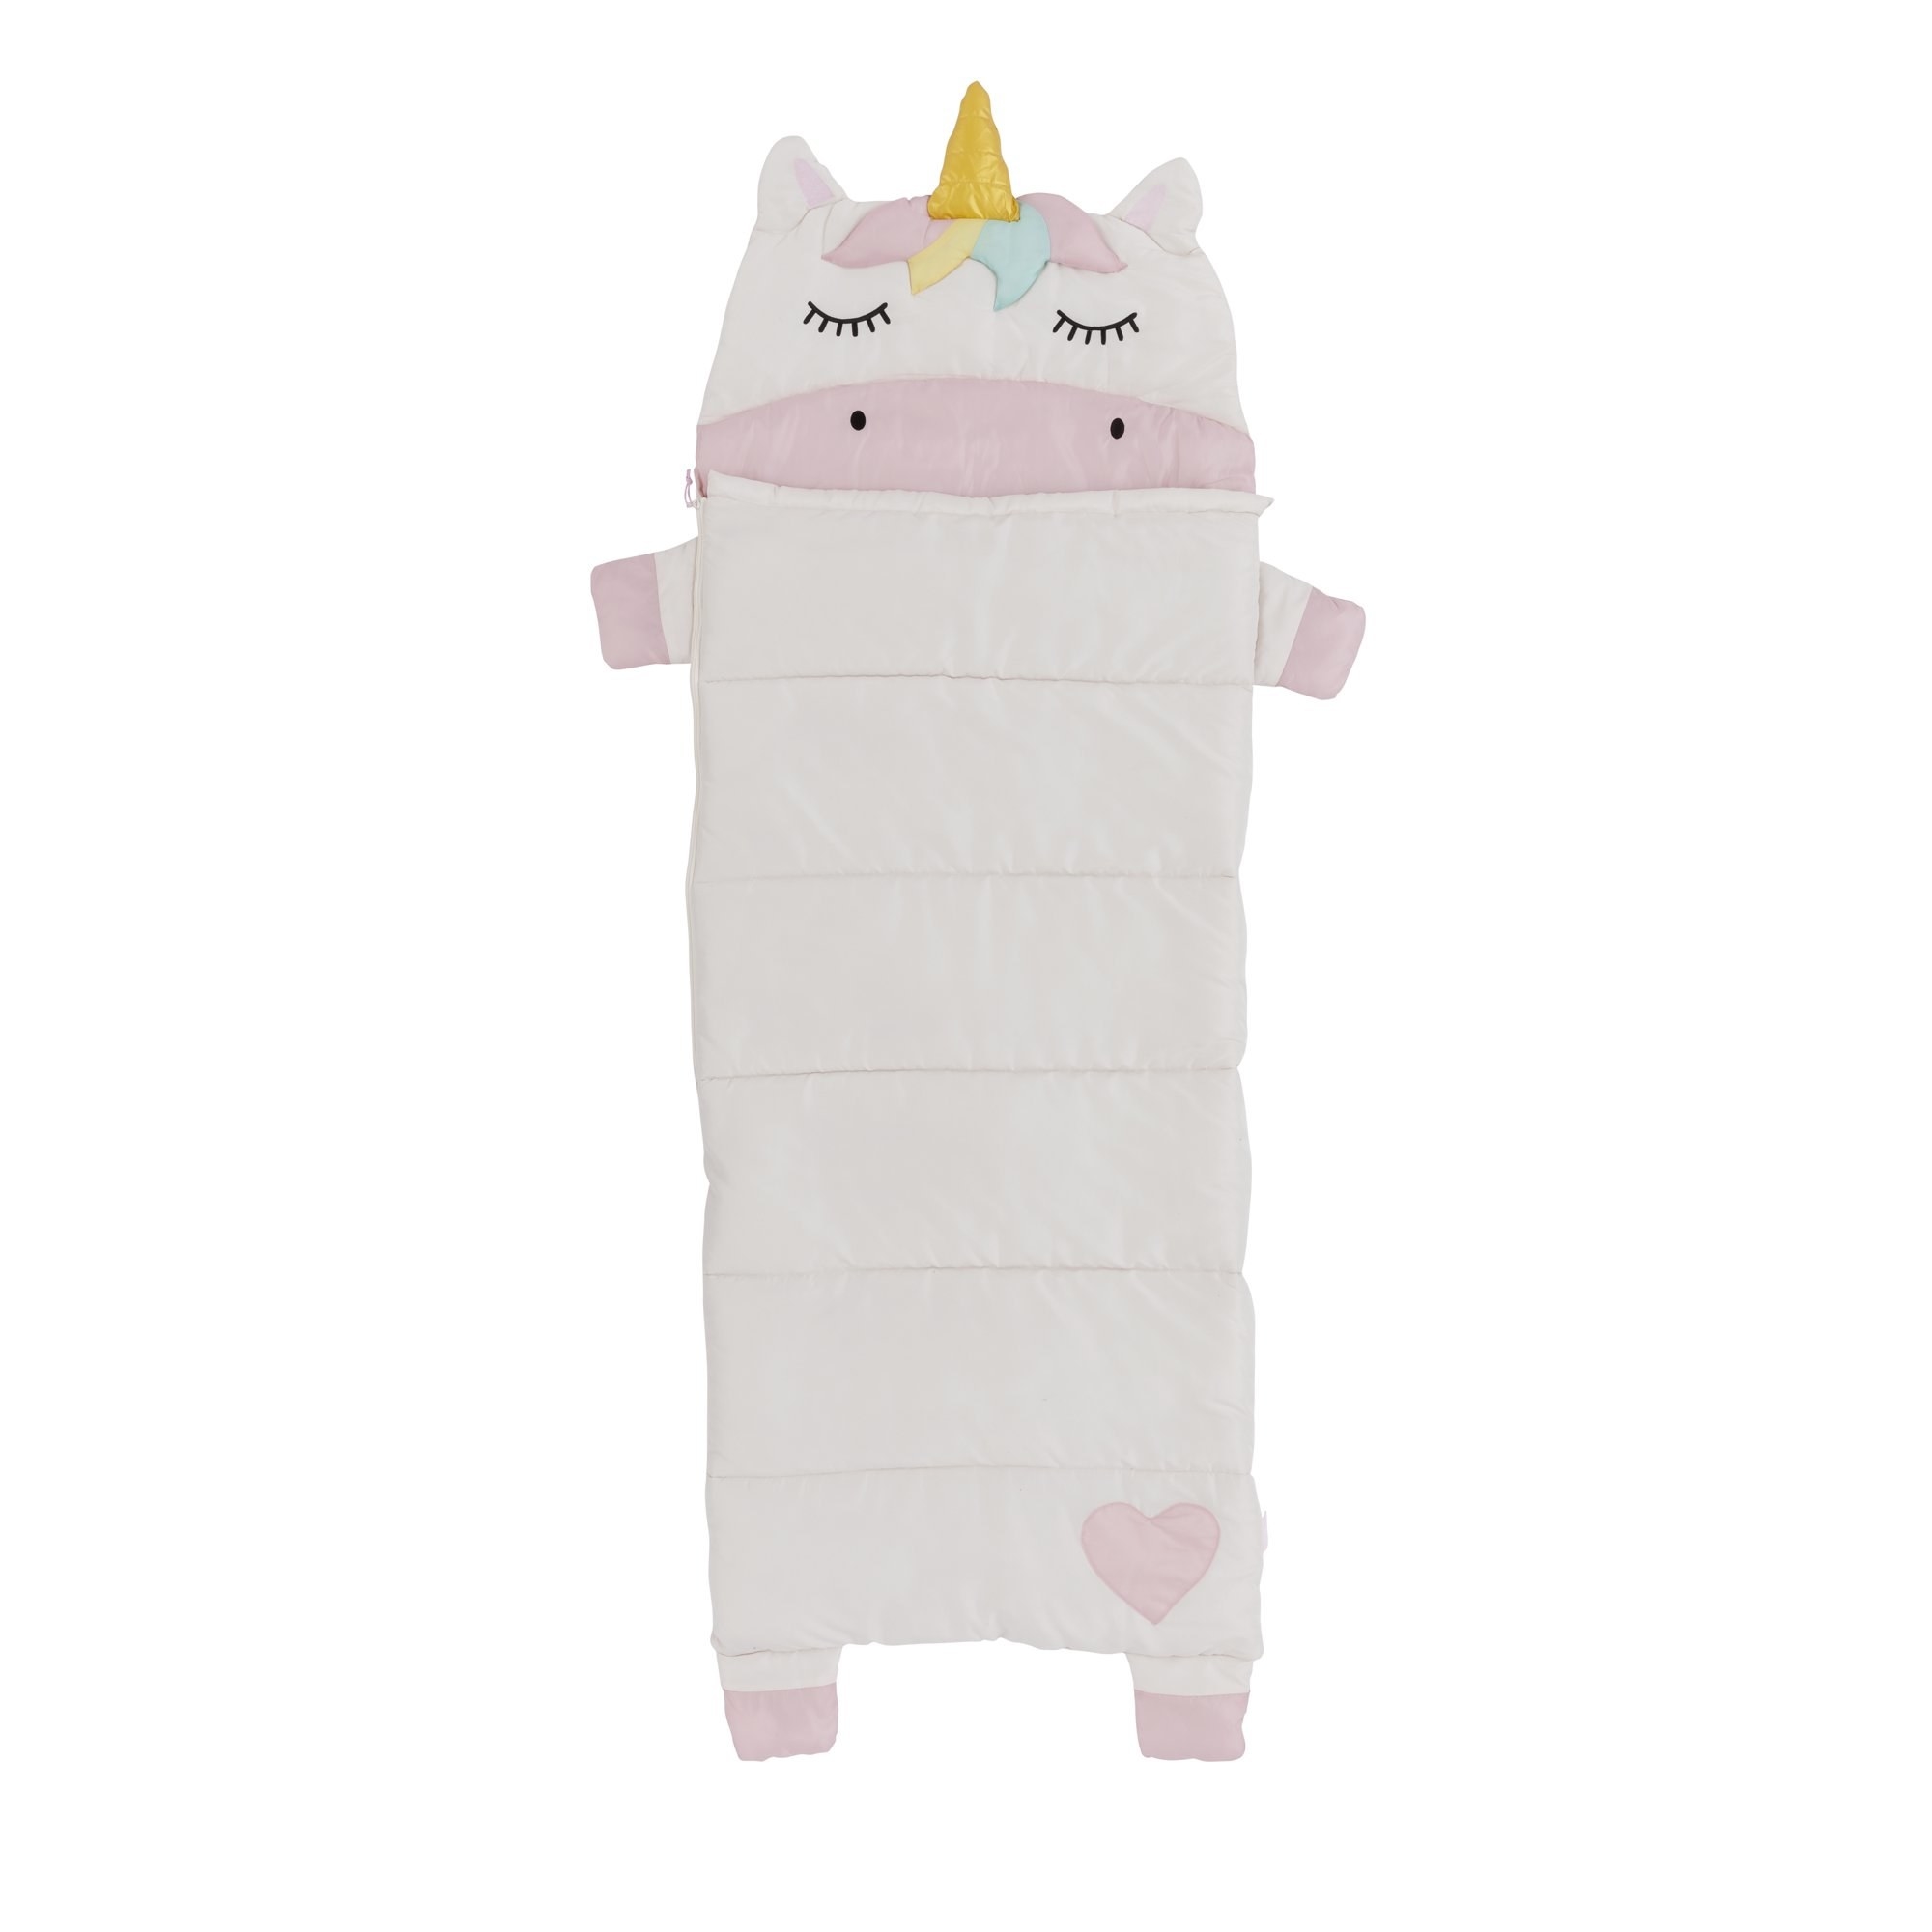 A sleeping bag shaped to resemble a sleeping unicorn